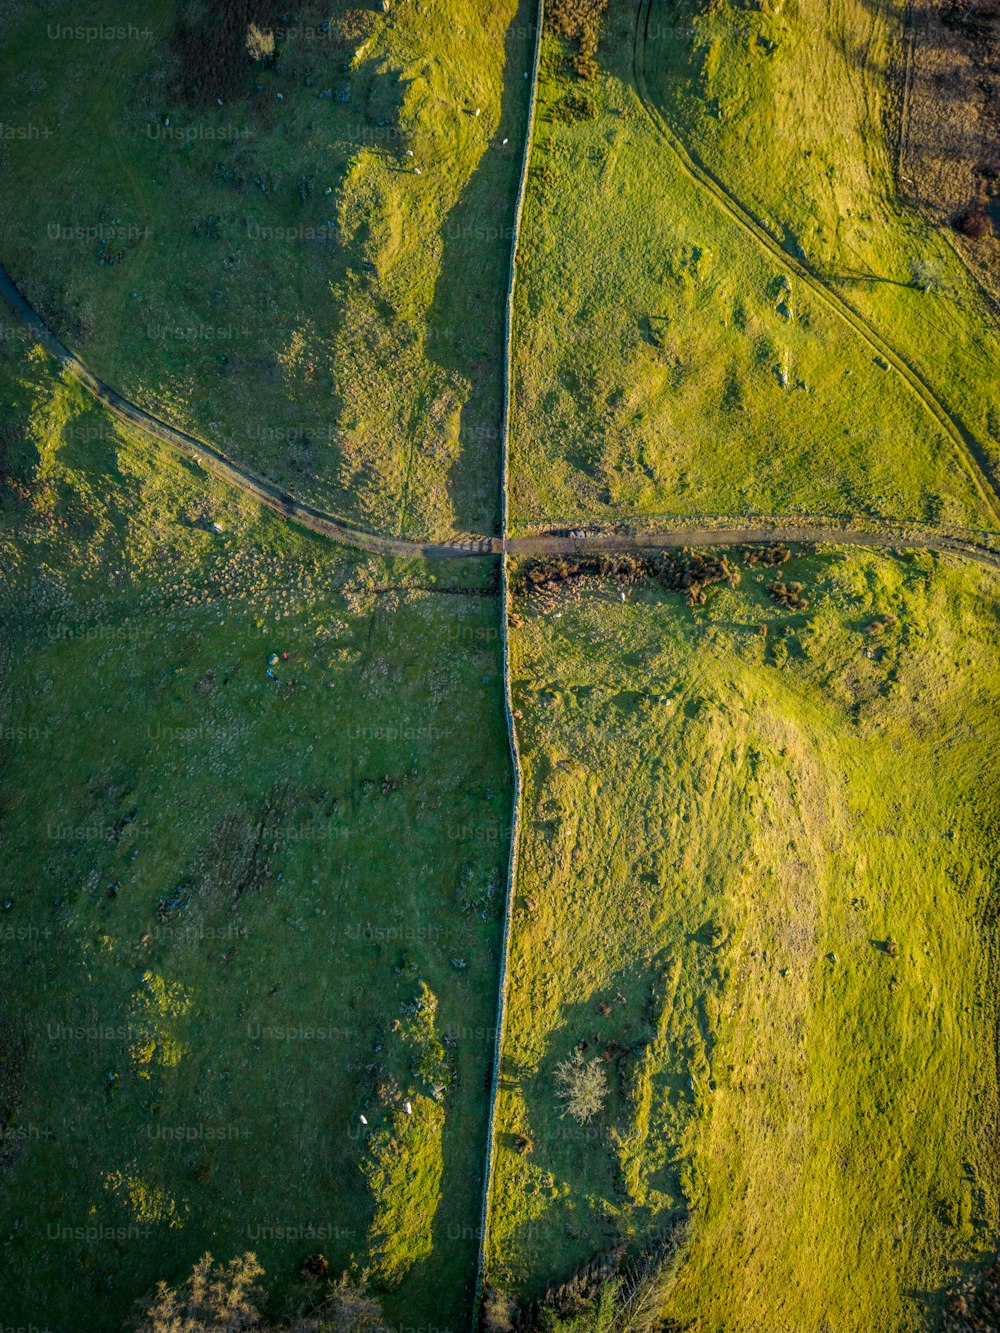 una veduta aerea di un campo erboso con un binario del treno